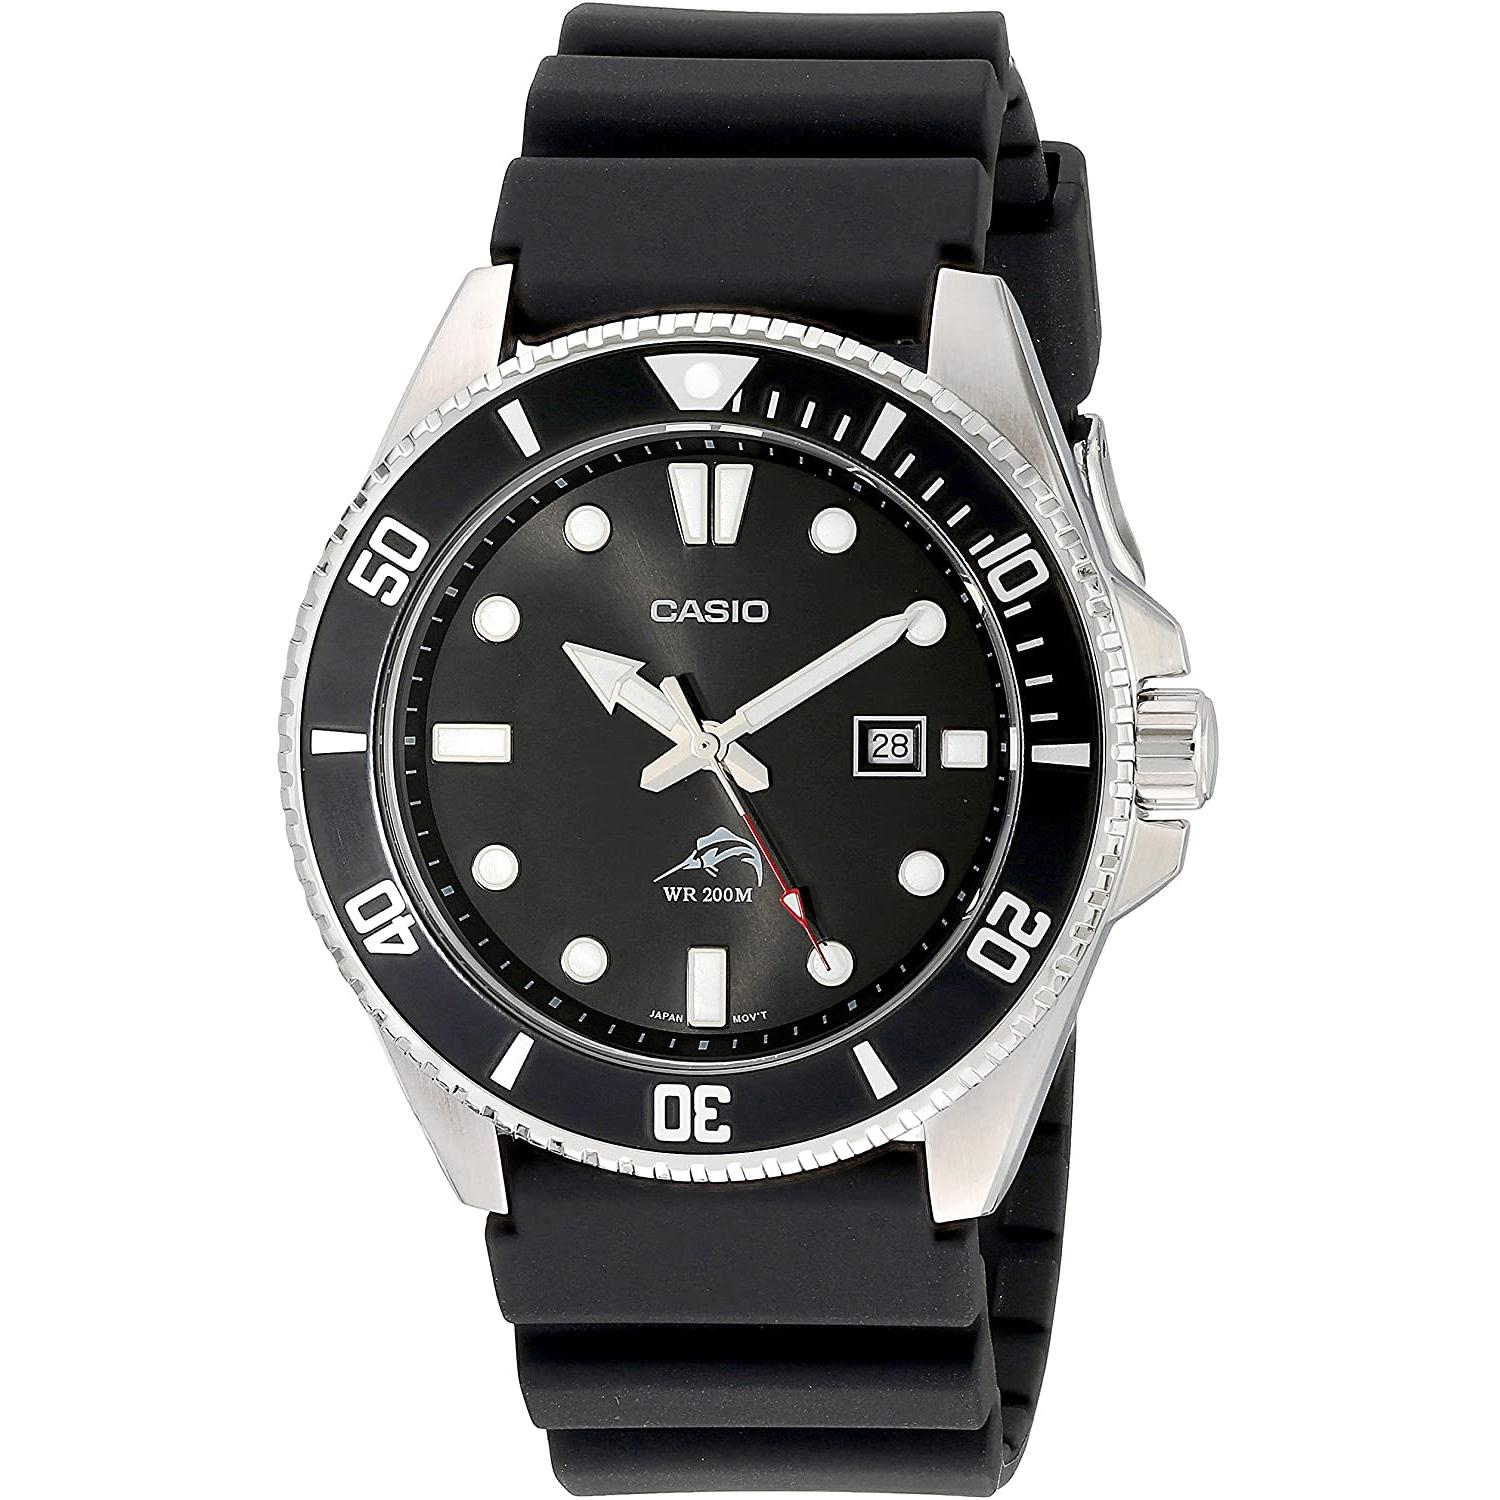 Casio MDV106-1AV Men's Black Dive-Style Sport Watch for $42.99 Shipped